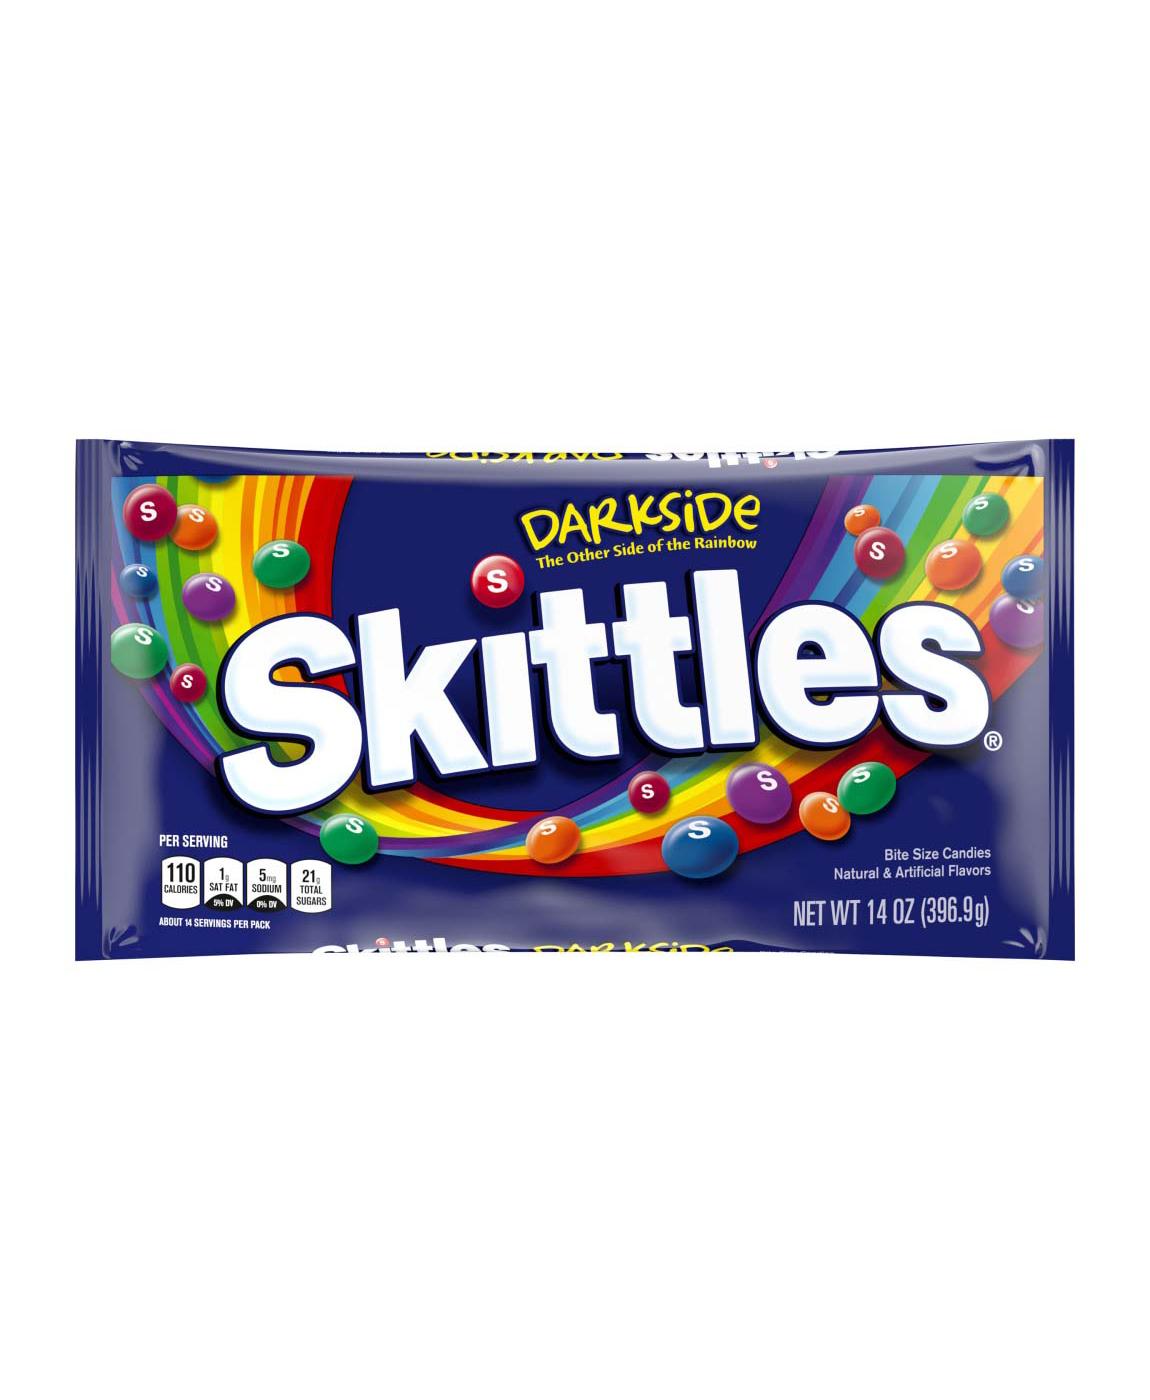 Skittles Darkside Lay Down Bag; image 1 of 6